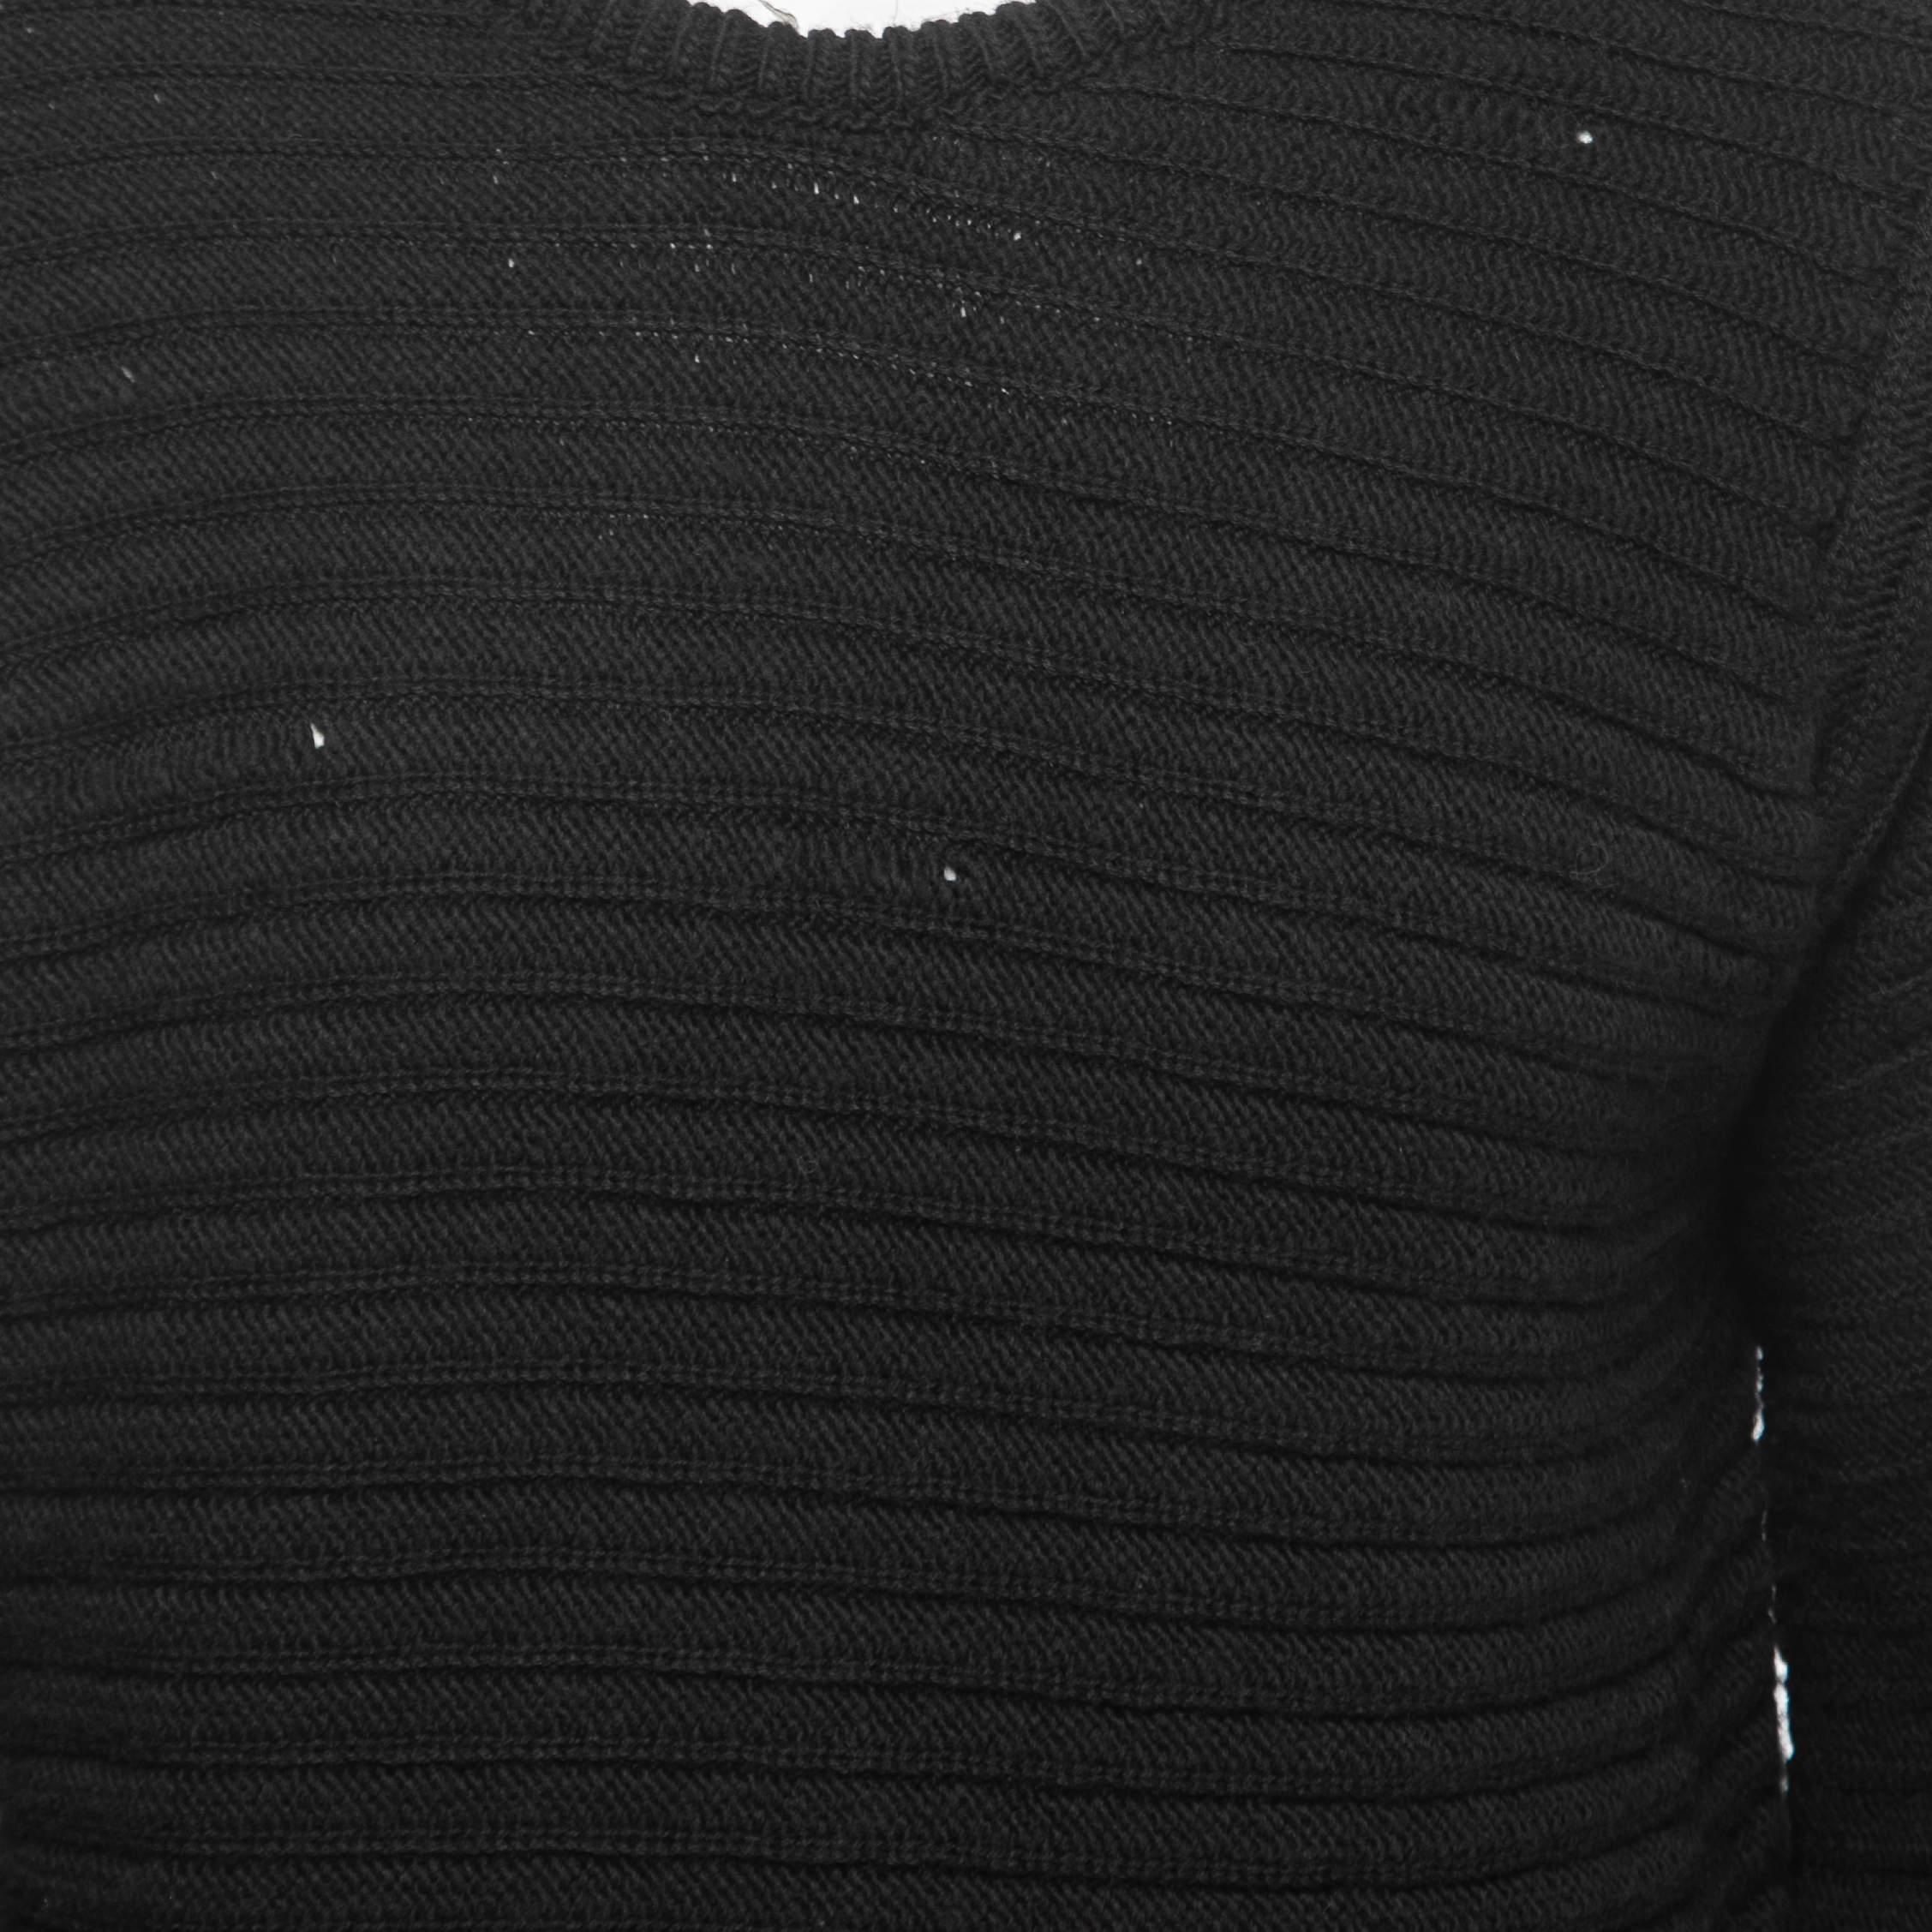 Zadig & Voltaire Black Distressed Merino Wool Jeremy Raye Sweater L 5